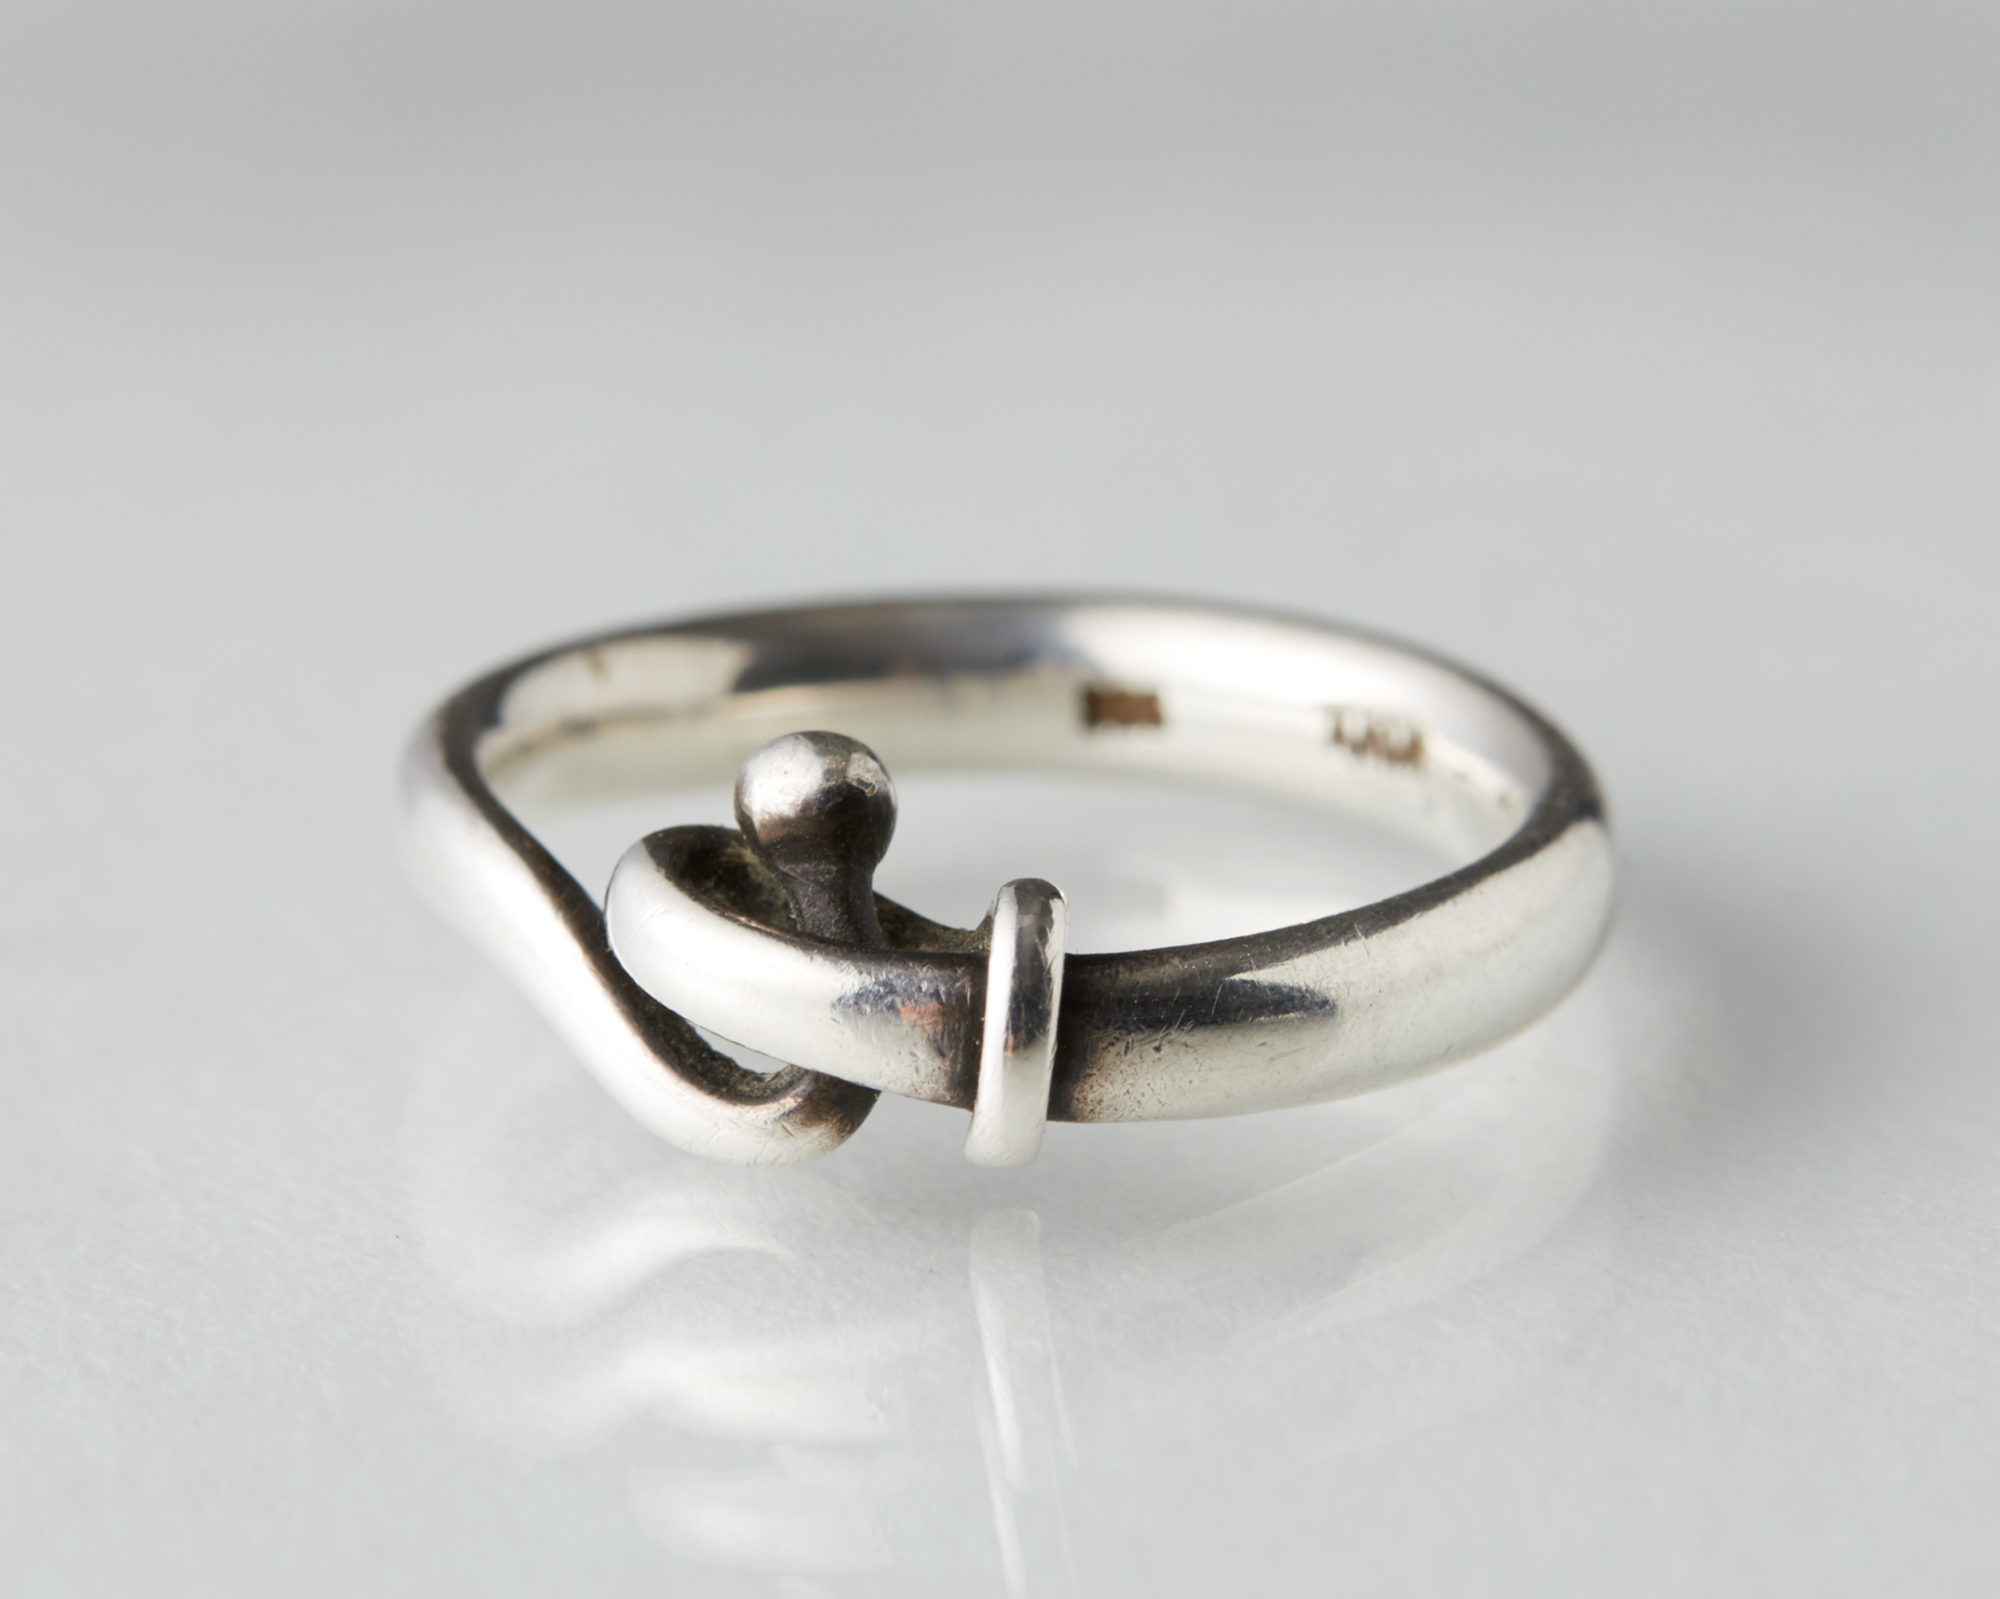 Ring designed by Torun Bülow-Hübe, — Modernity